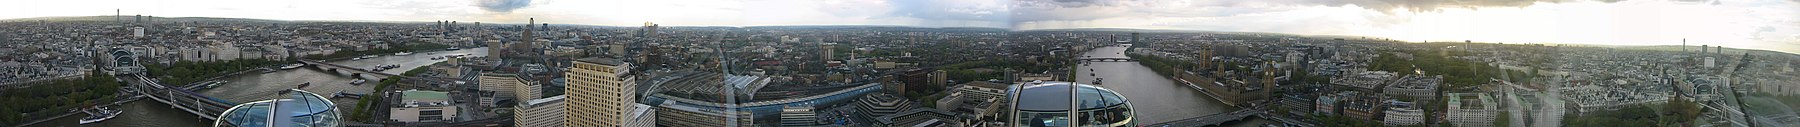 Panoramautsikt från London Eye.